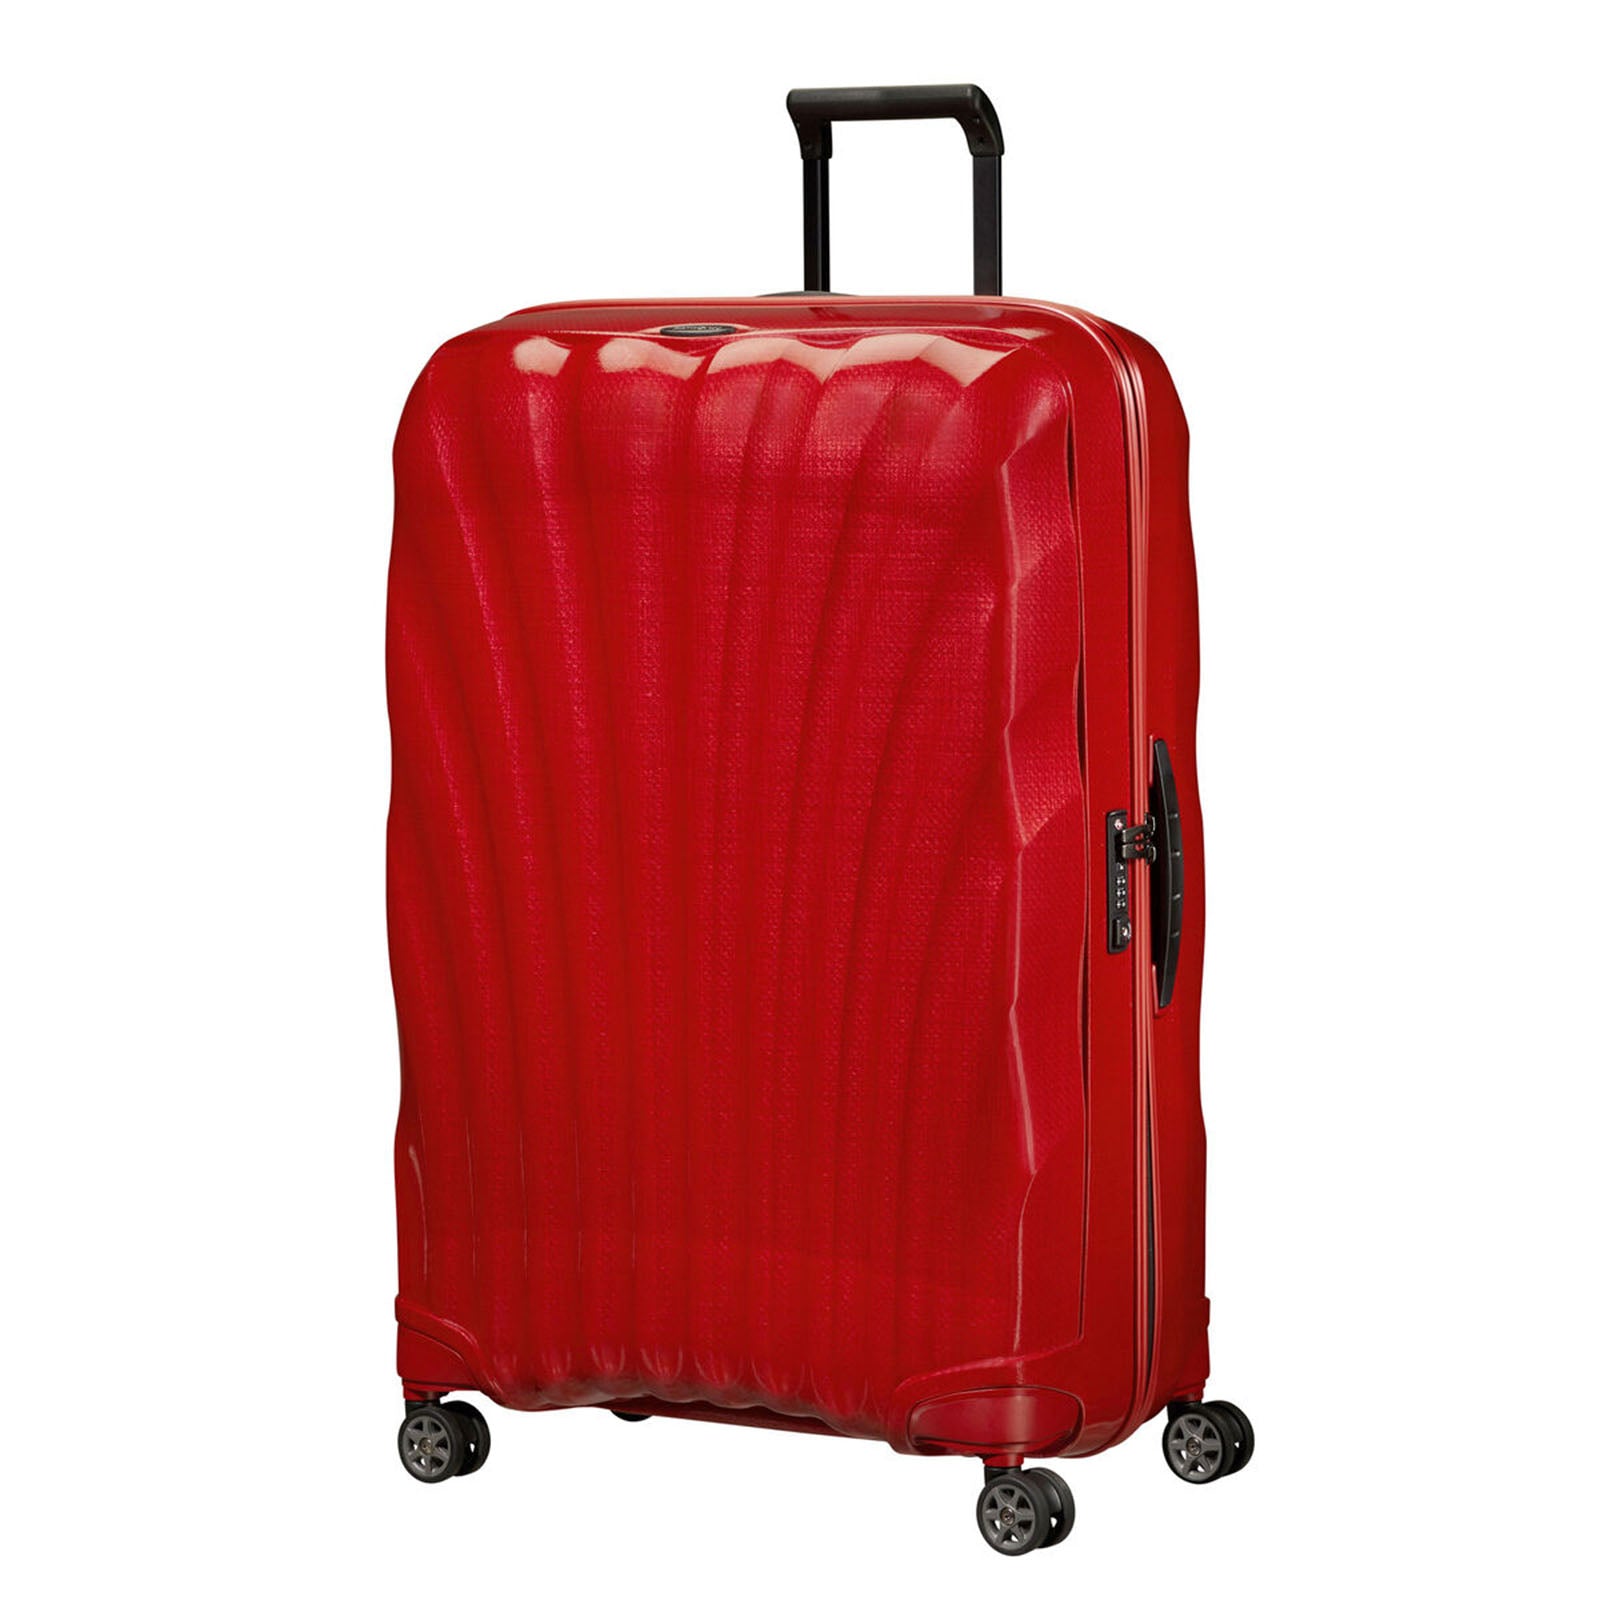 Samsonite-C-Lite-81cm-Suitcase-Chili-Red-Front-Angle